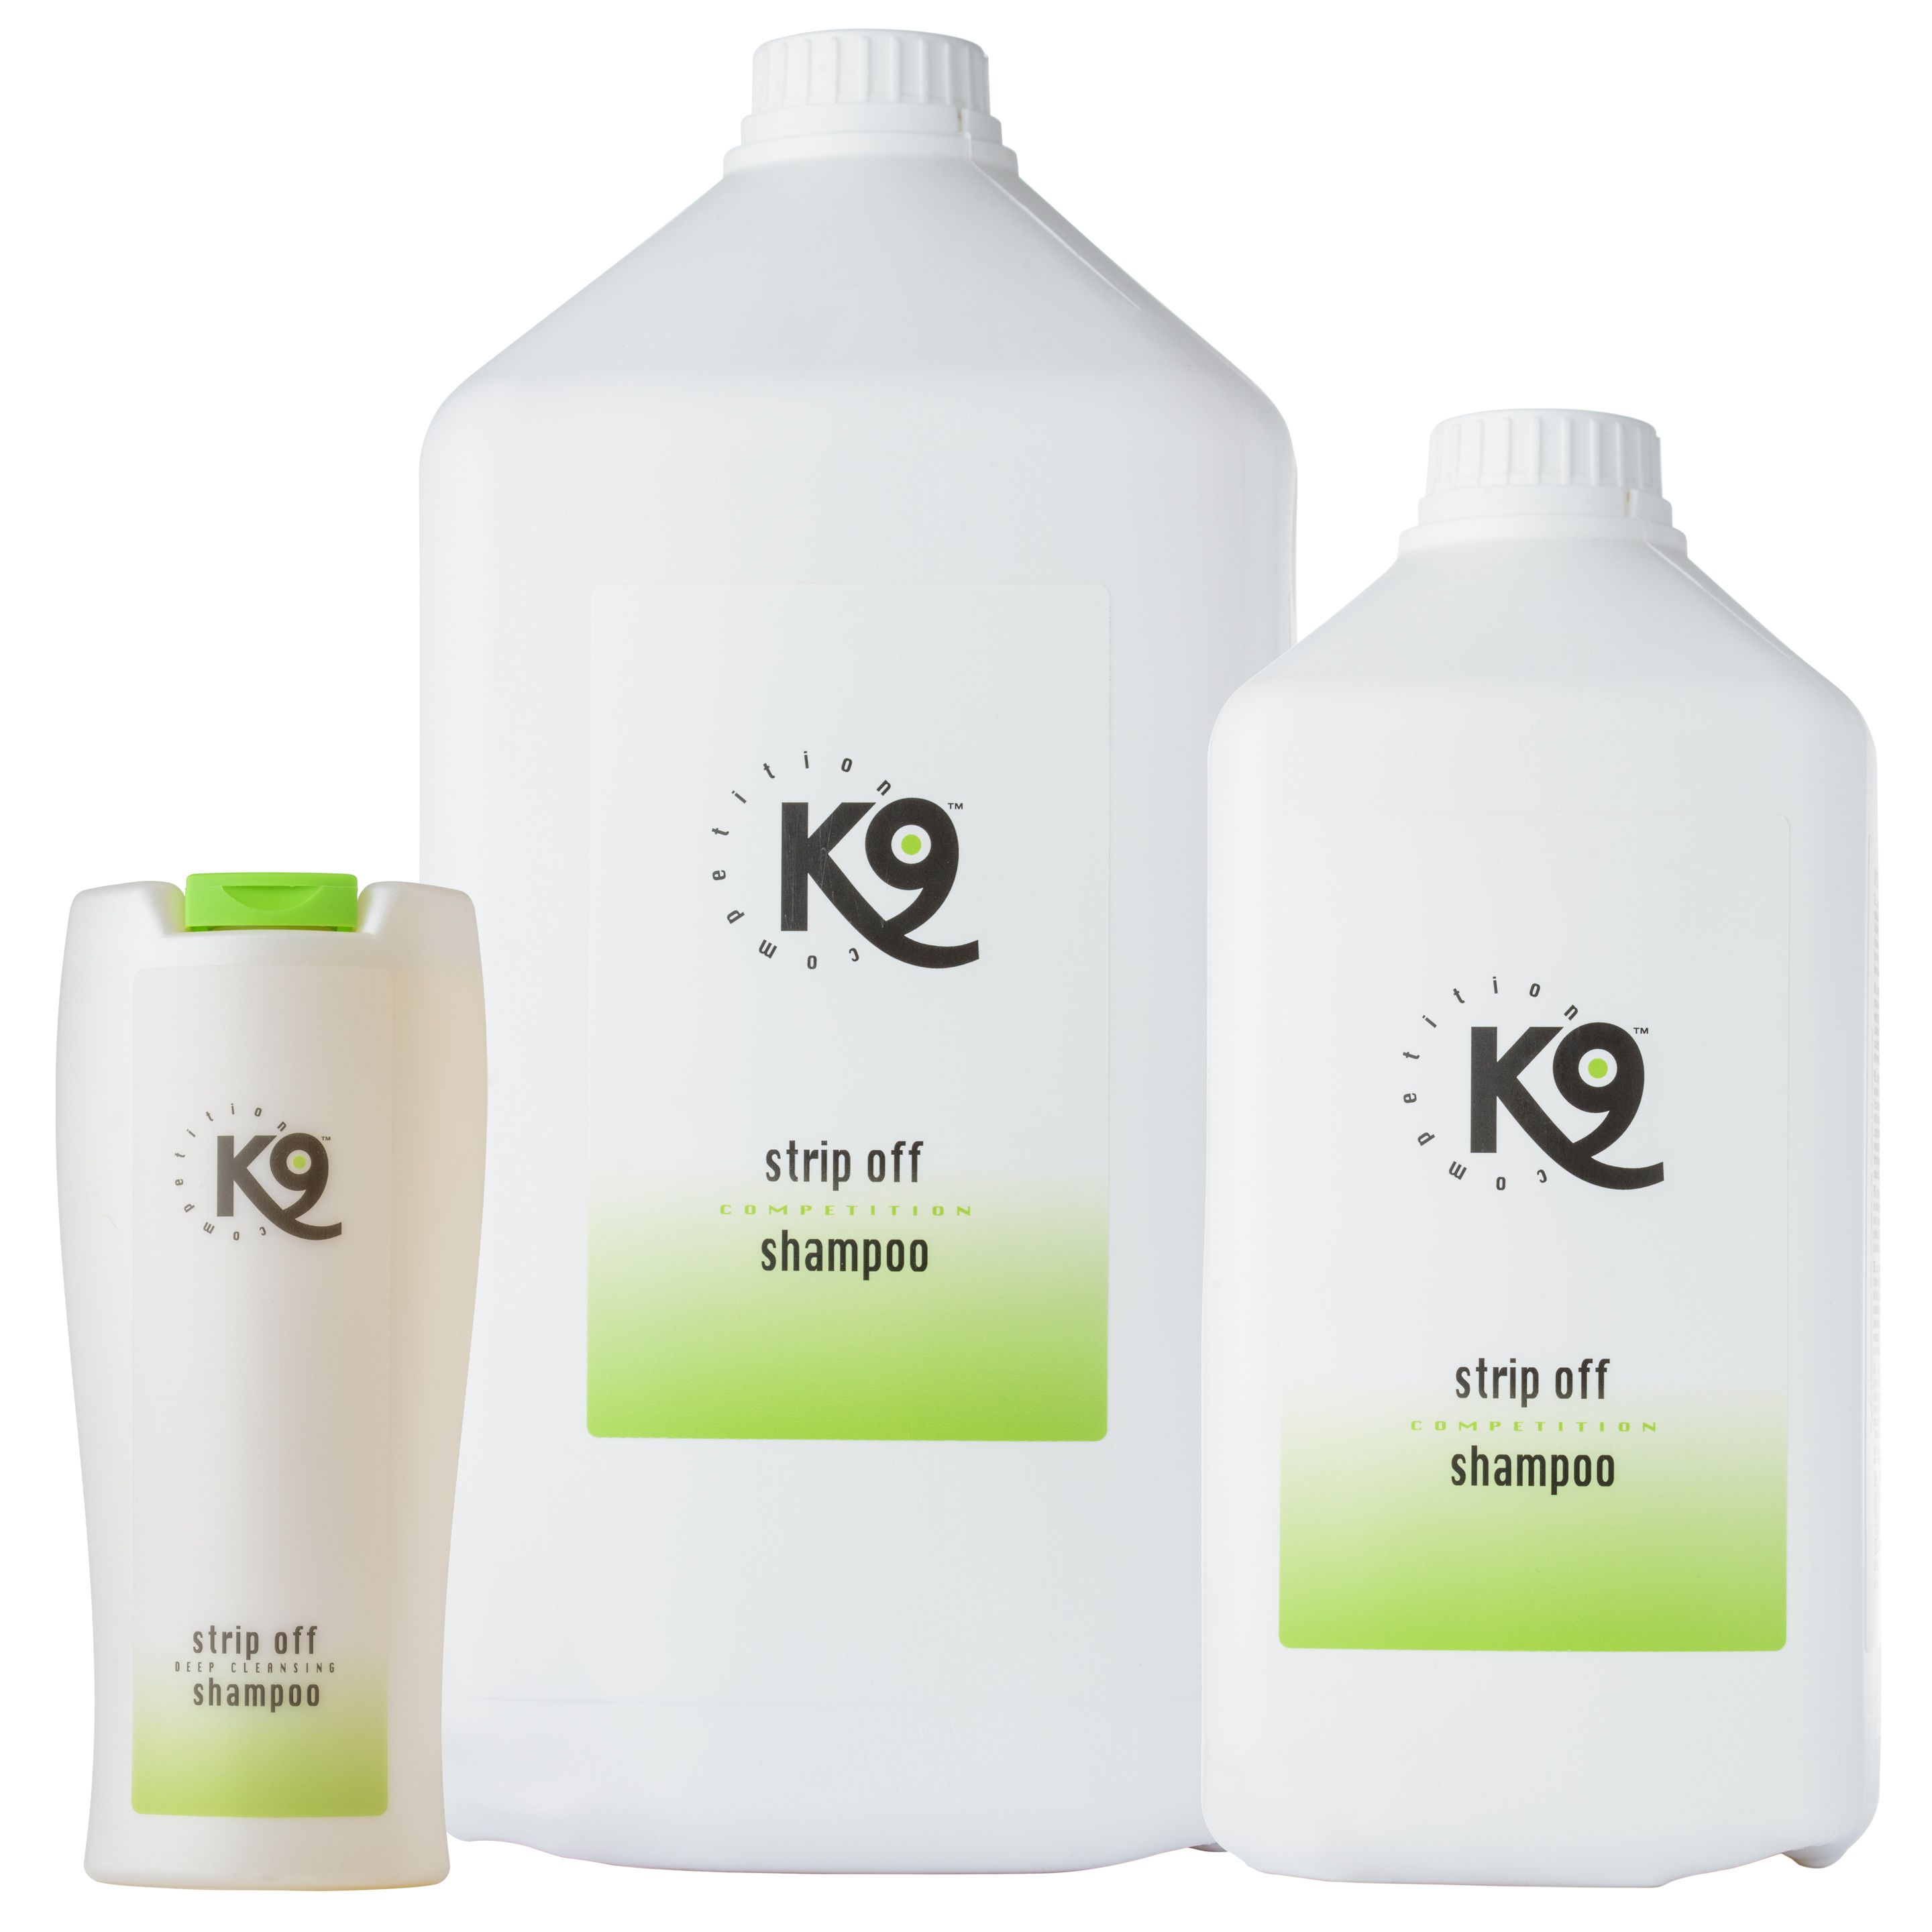 szampon dla psów k9 botaniqua